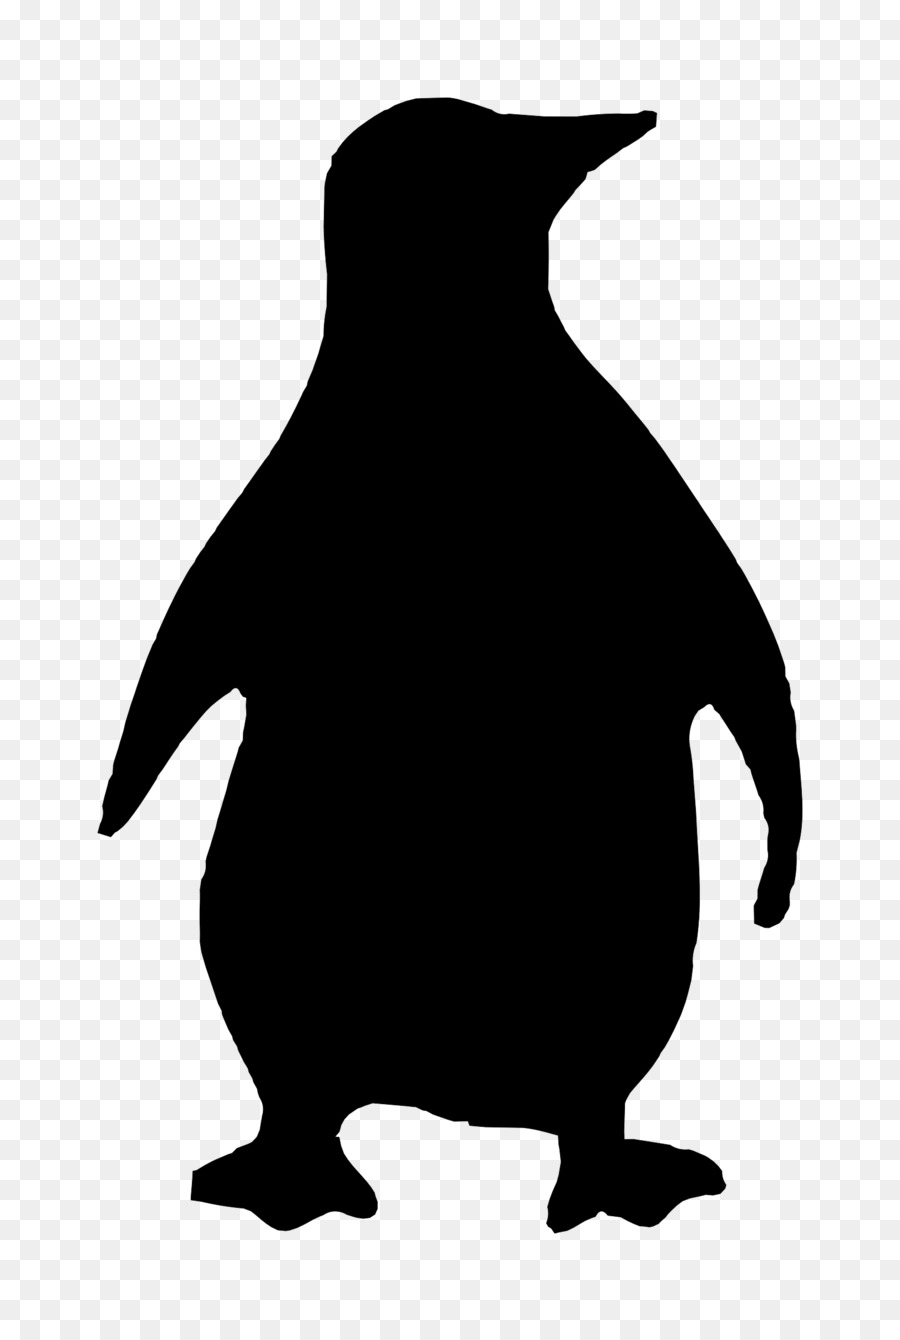 Penguin Silhouette Bird Clip art - penguins png download - 1623*2400 - Free Transparent Penguin png Download.